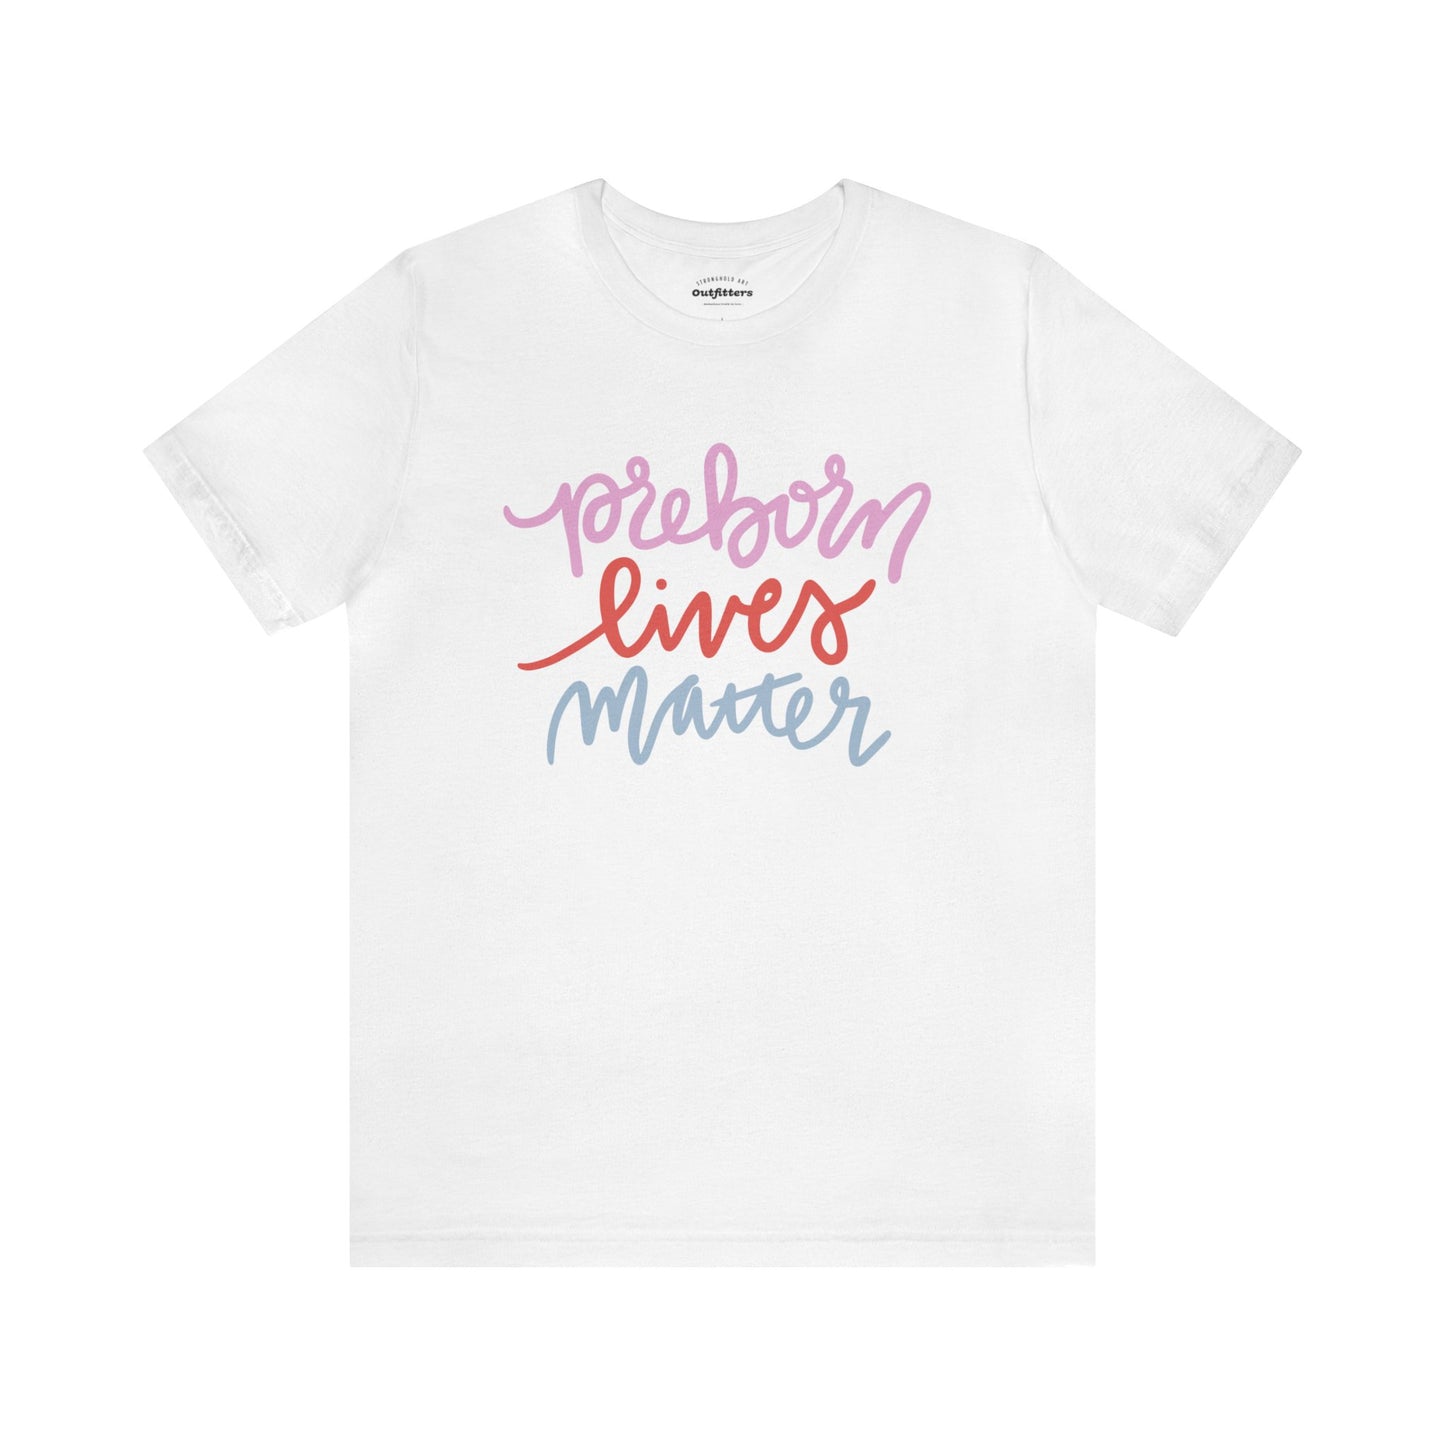 Preborn Lives Matter | Pregnancy center Donation | T-shirt